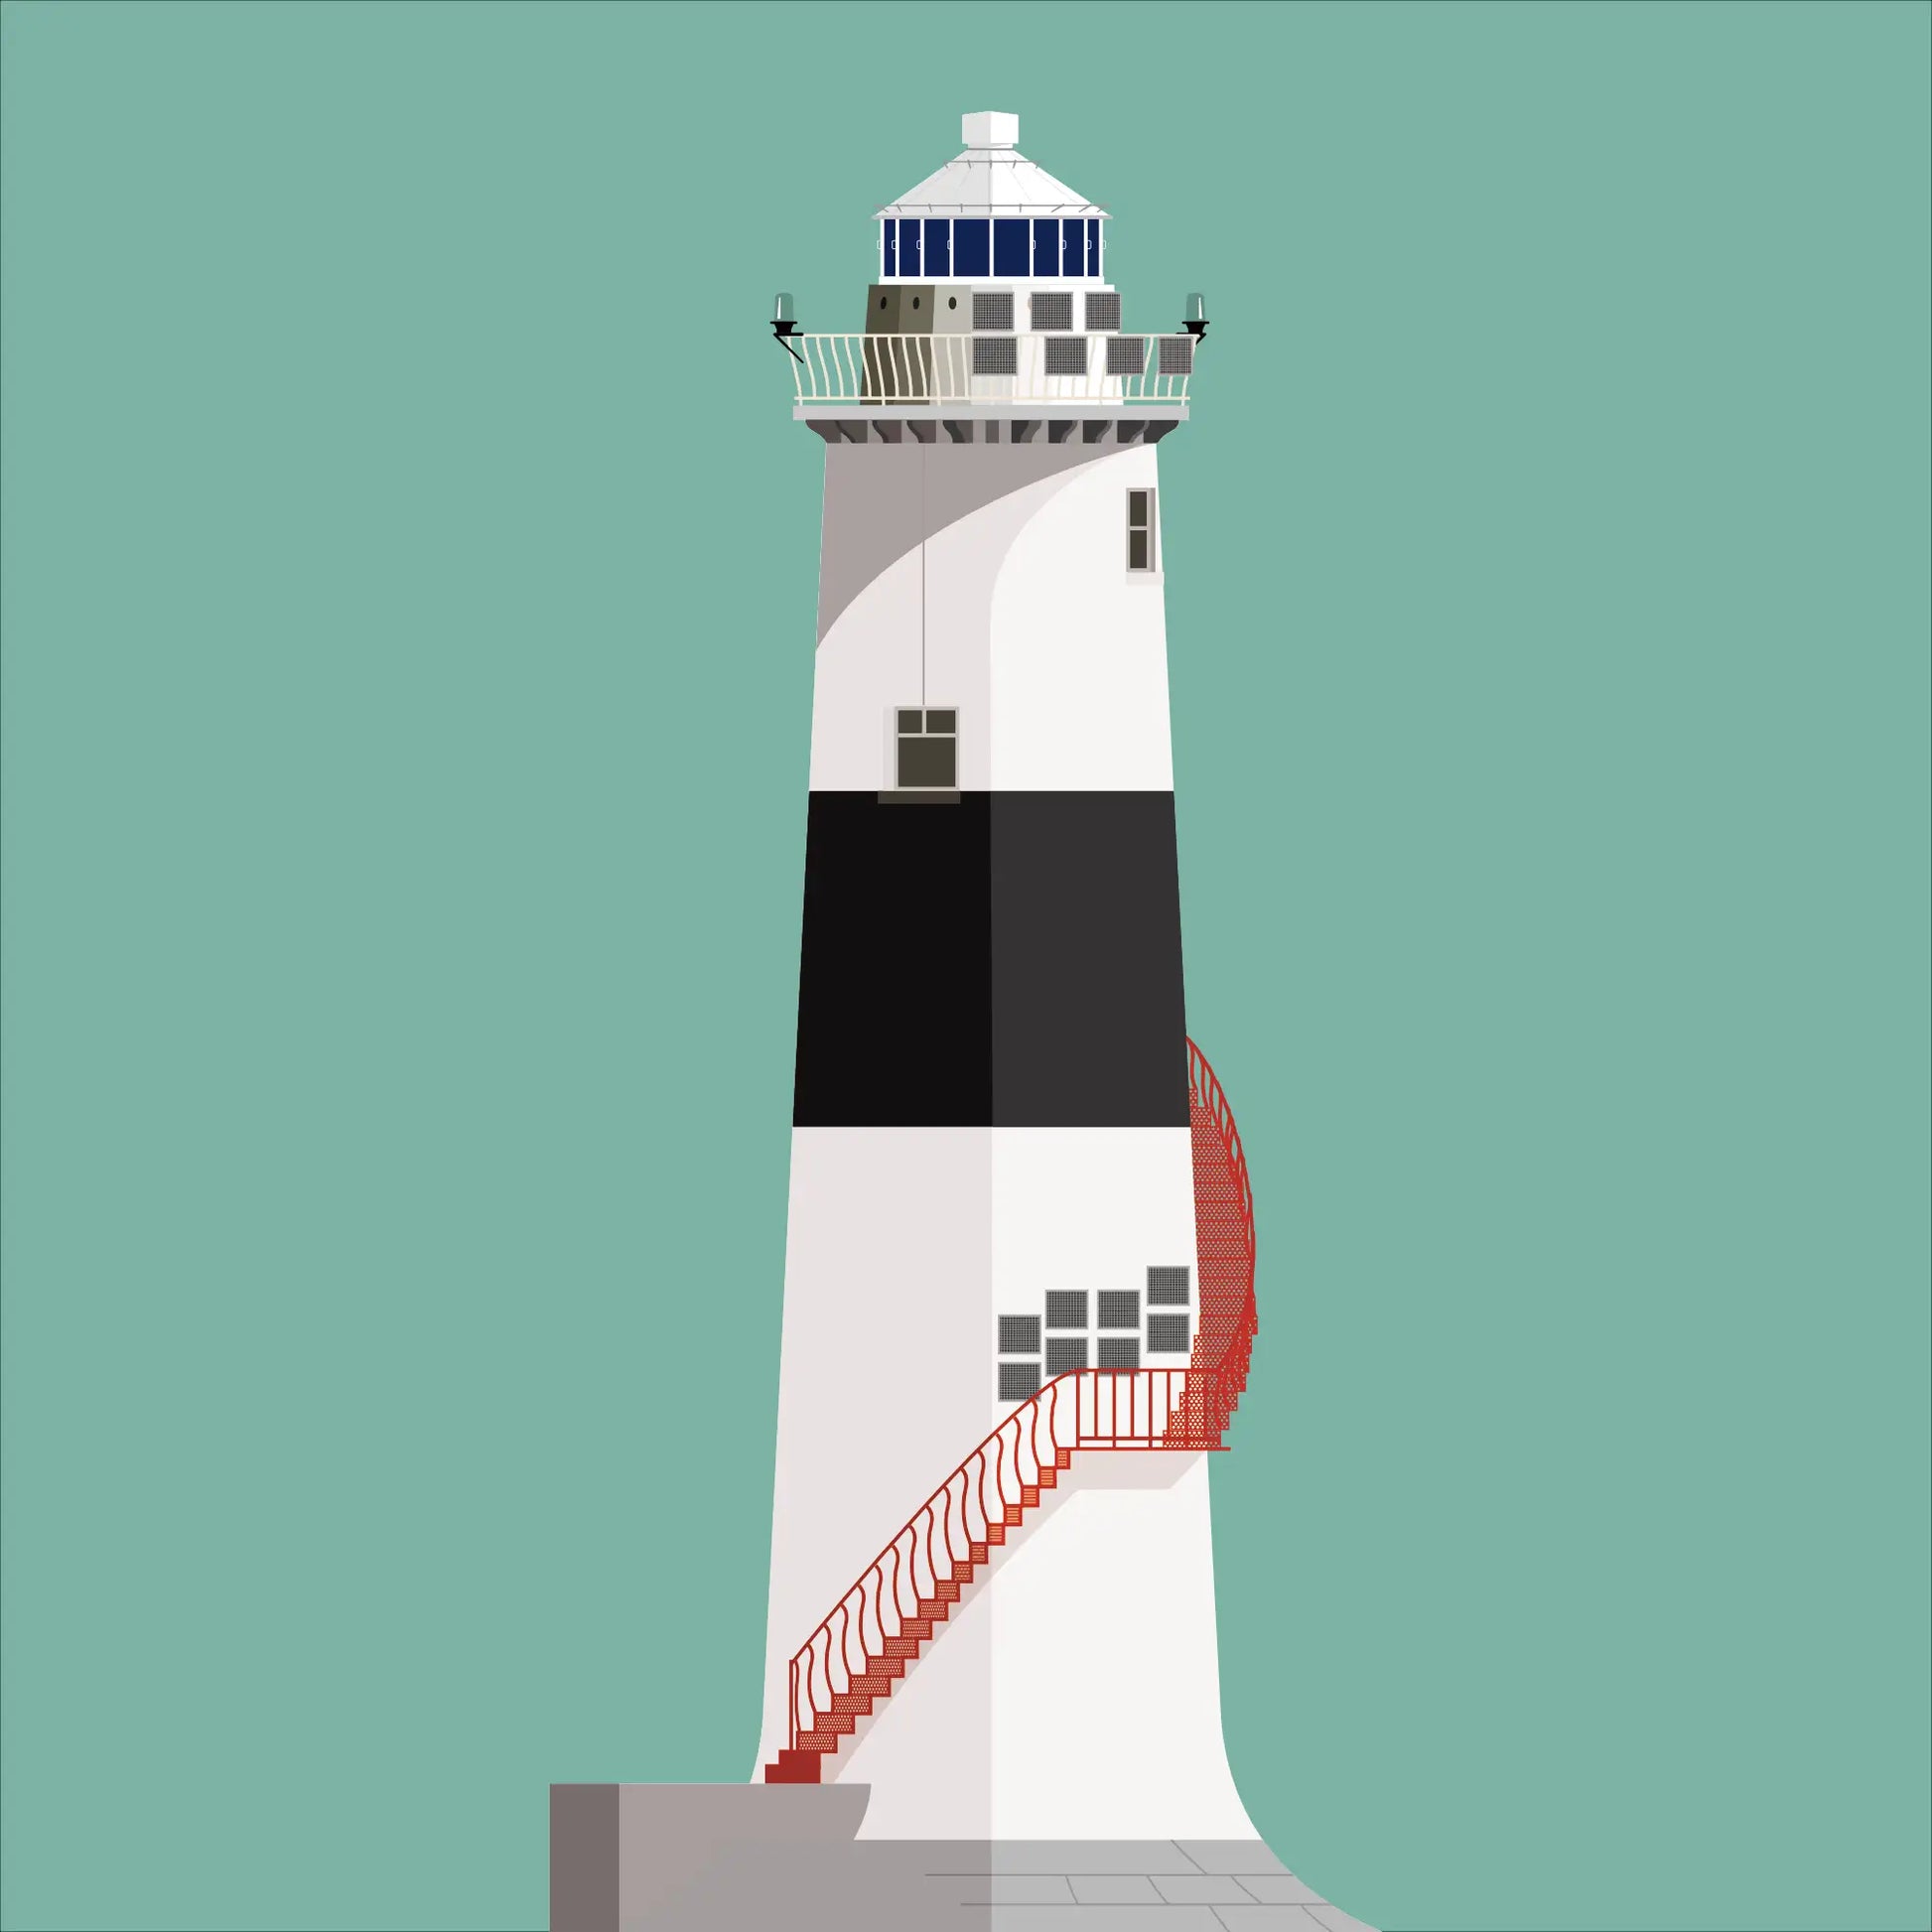 Illustration of Blackrock lighthouse on a white background inside light blue square.